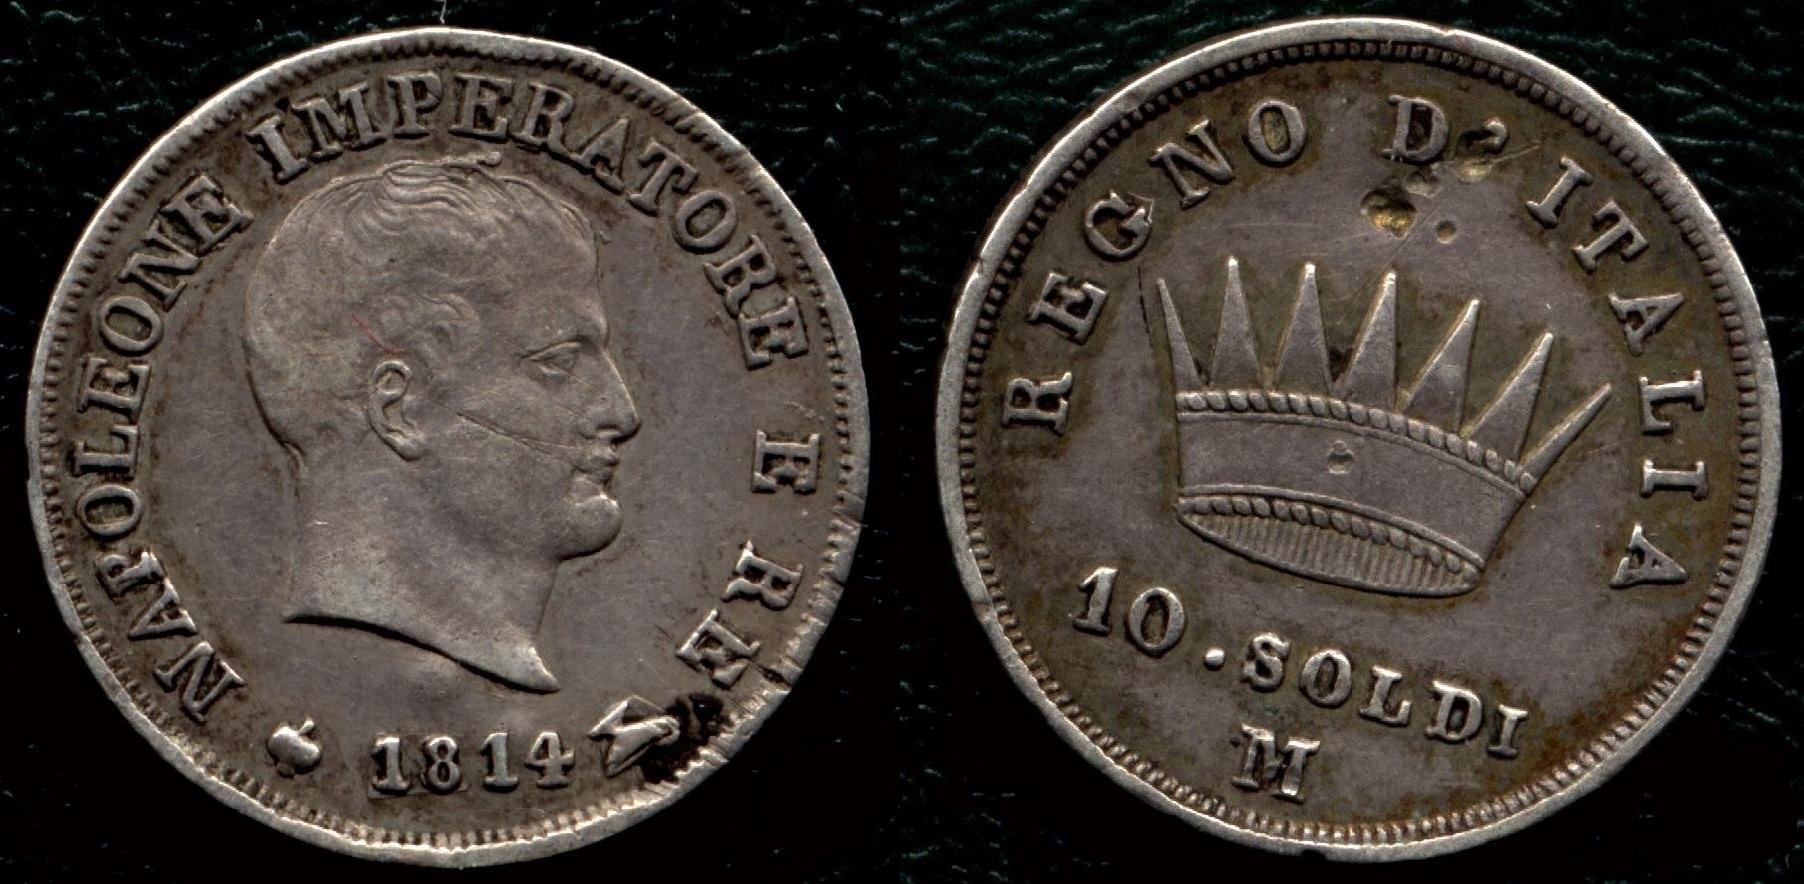 italian-10-soldo-coin-napoleonic-kingdom-of-italy-currency-wiki